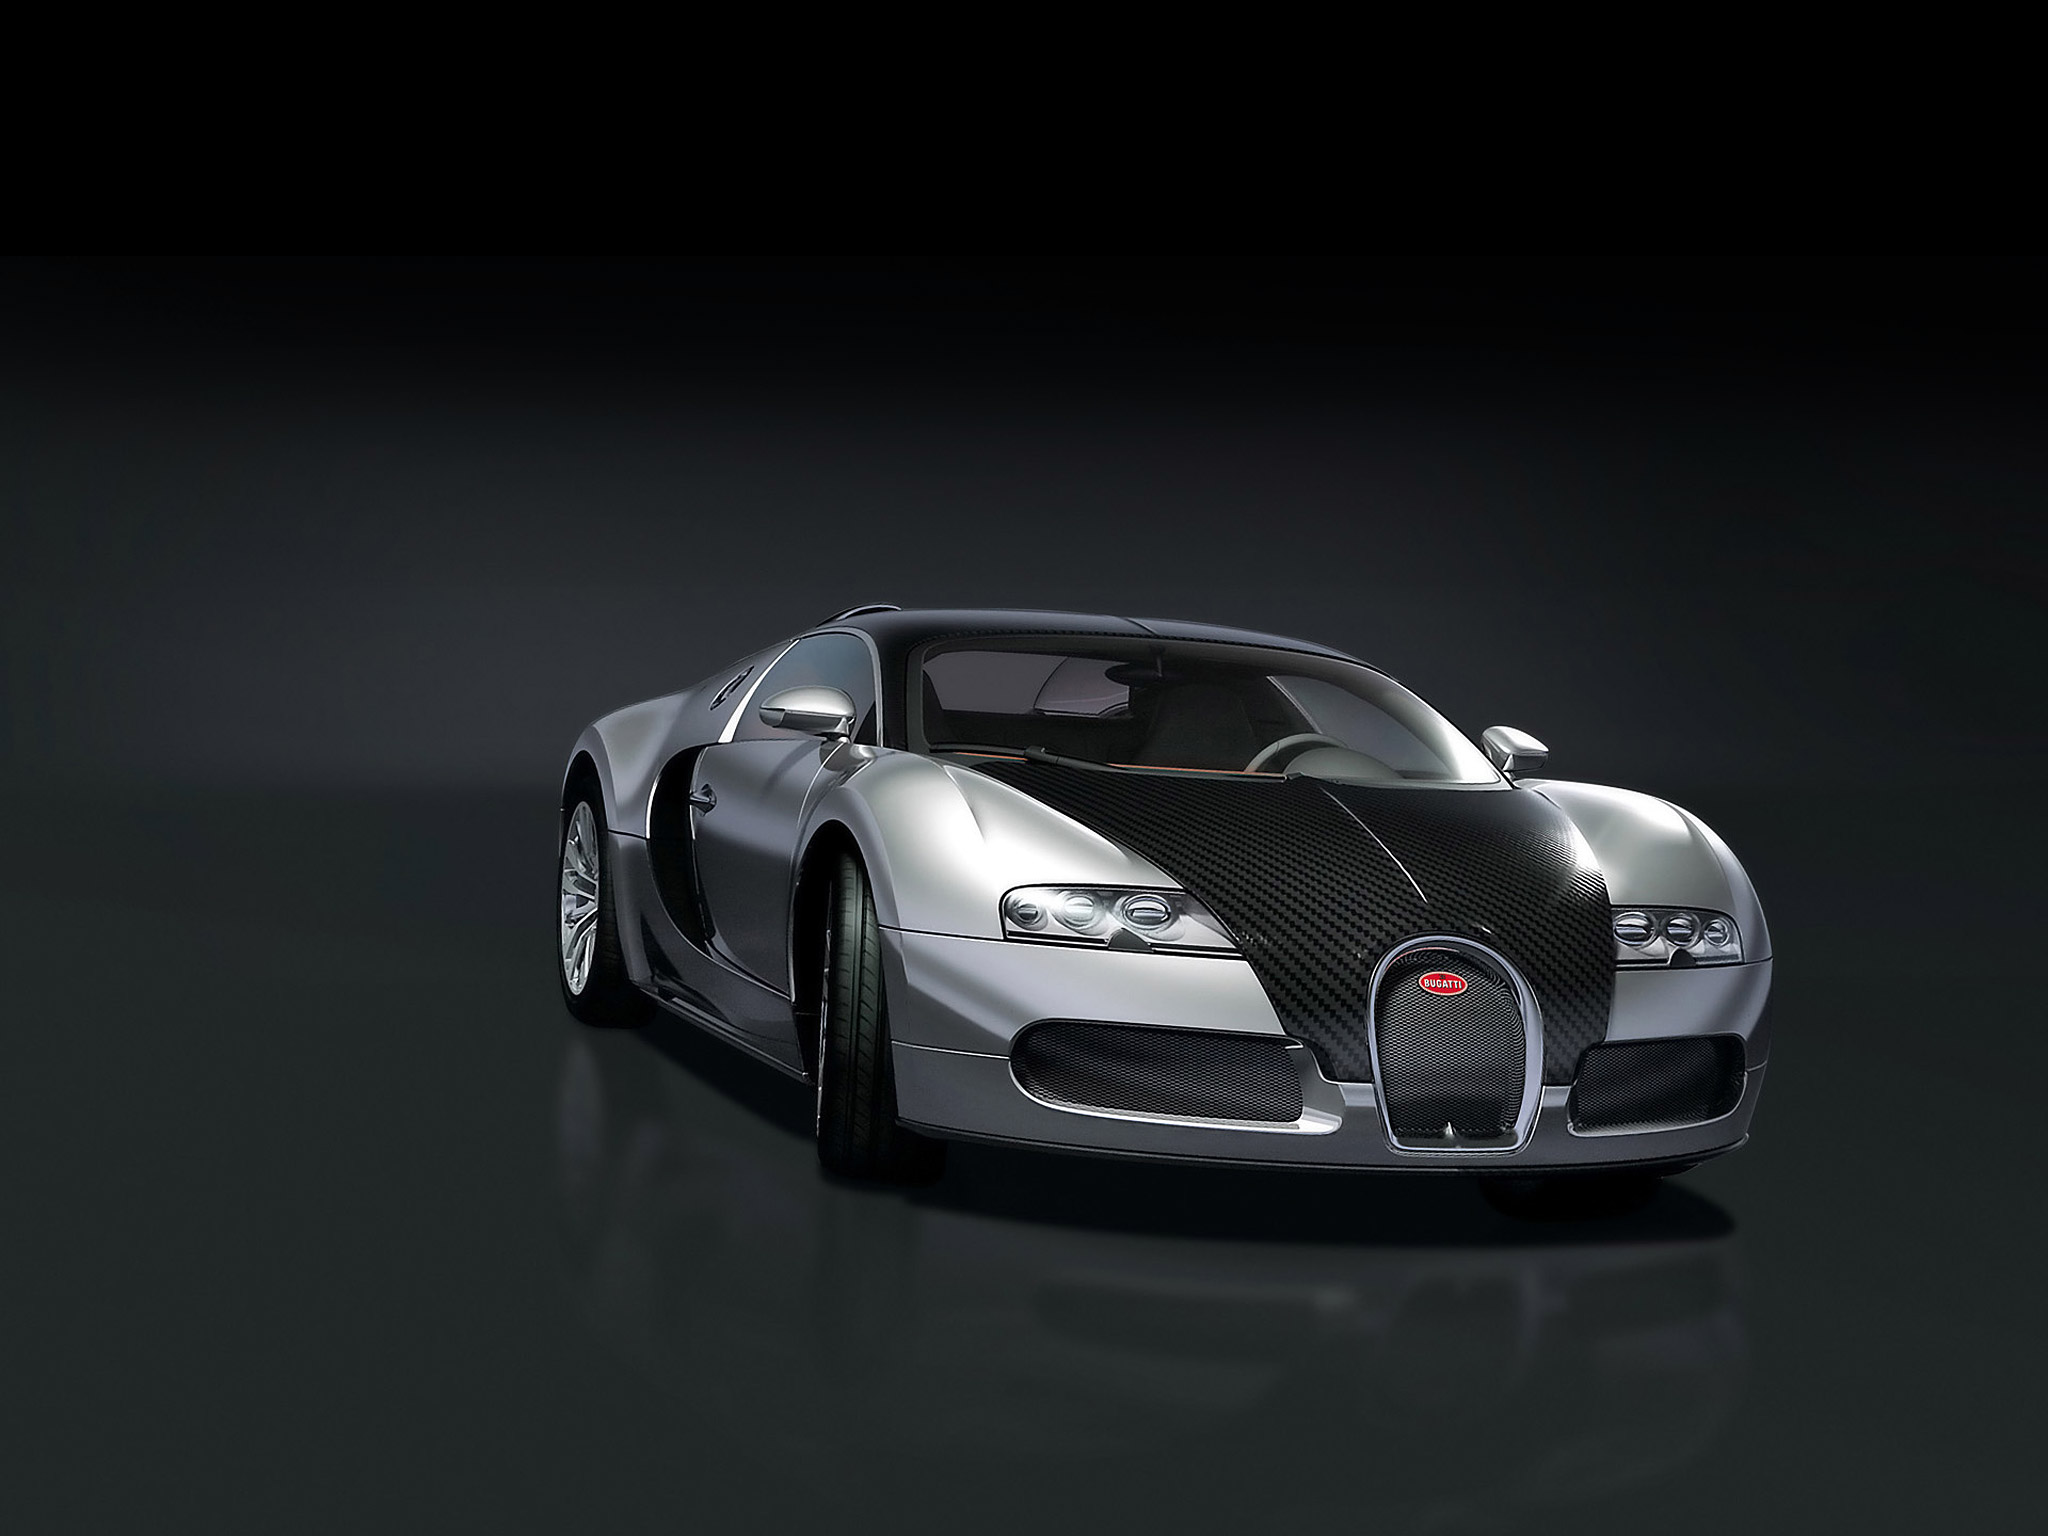 Los mejores fondos de pantalla de Bugatti Veyron 16 4 Pur Sang para la pantalla del teléfono